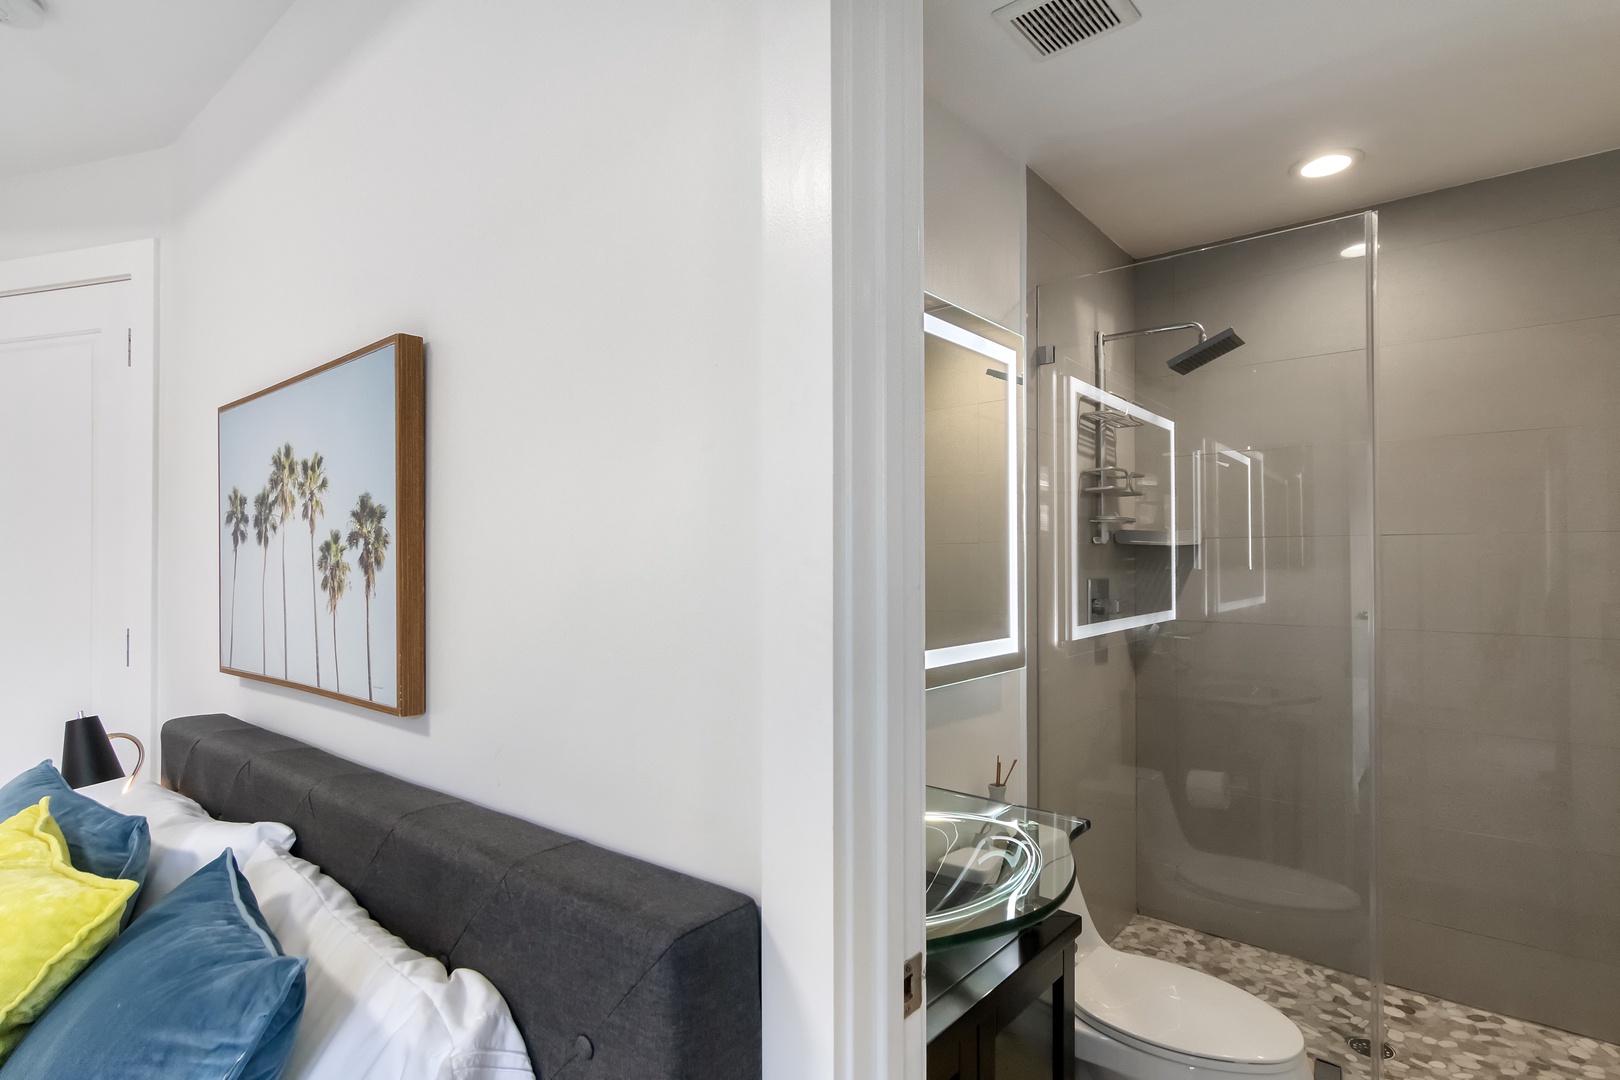 This ensuite bath showcases a sleek single vanity & spa-like glass shower